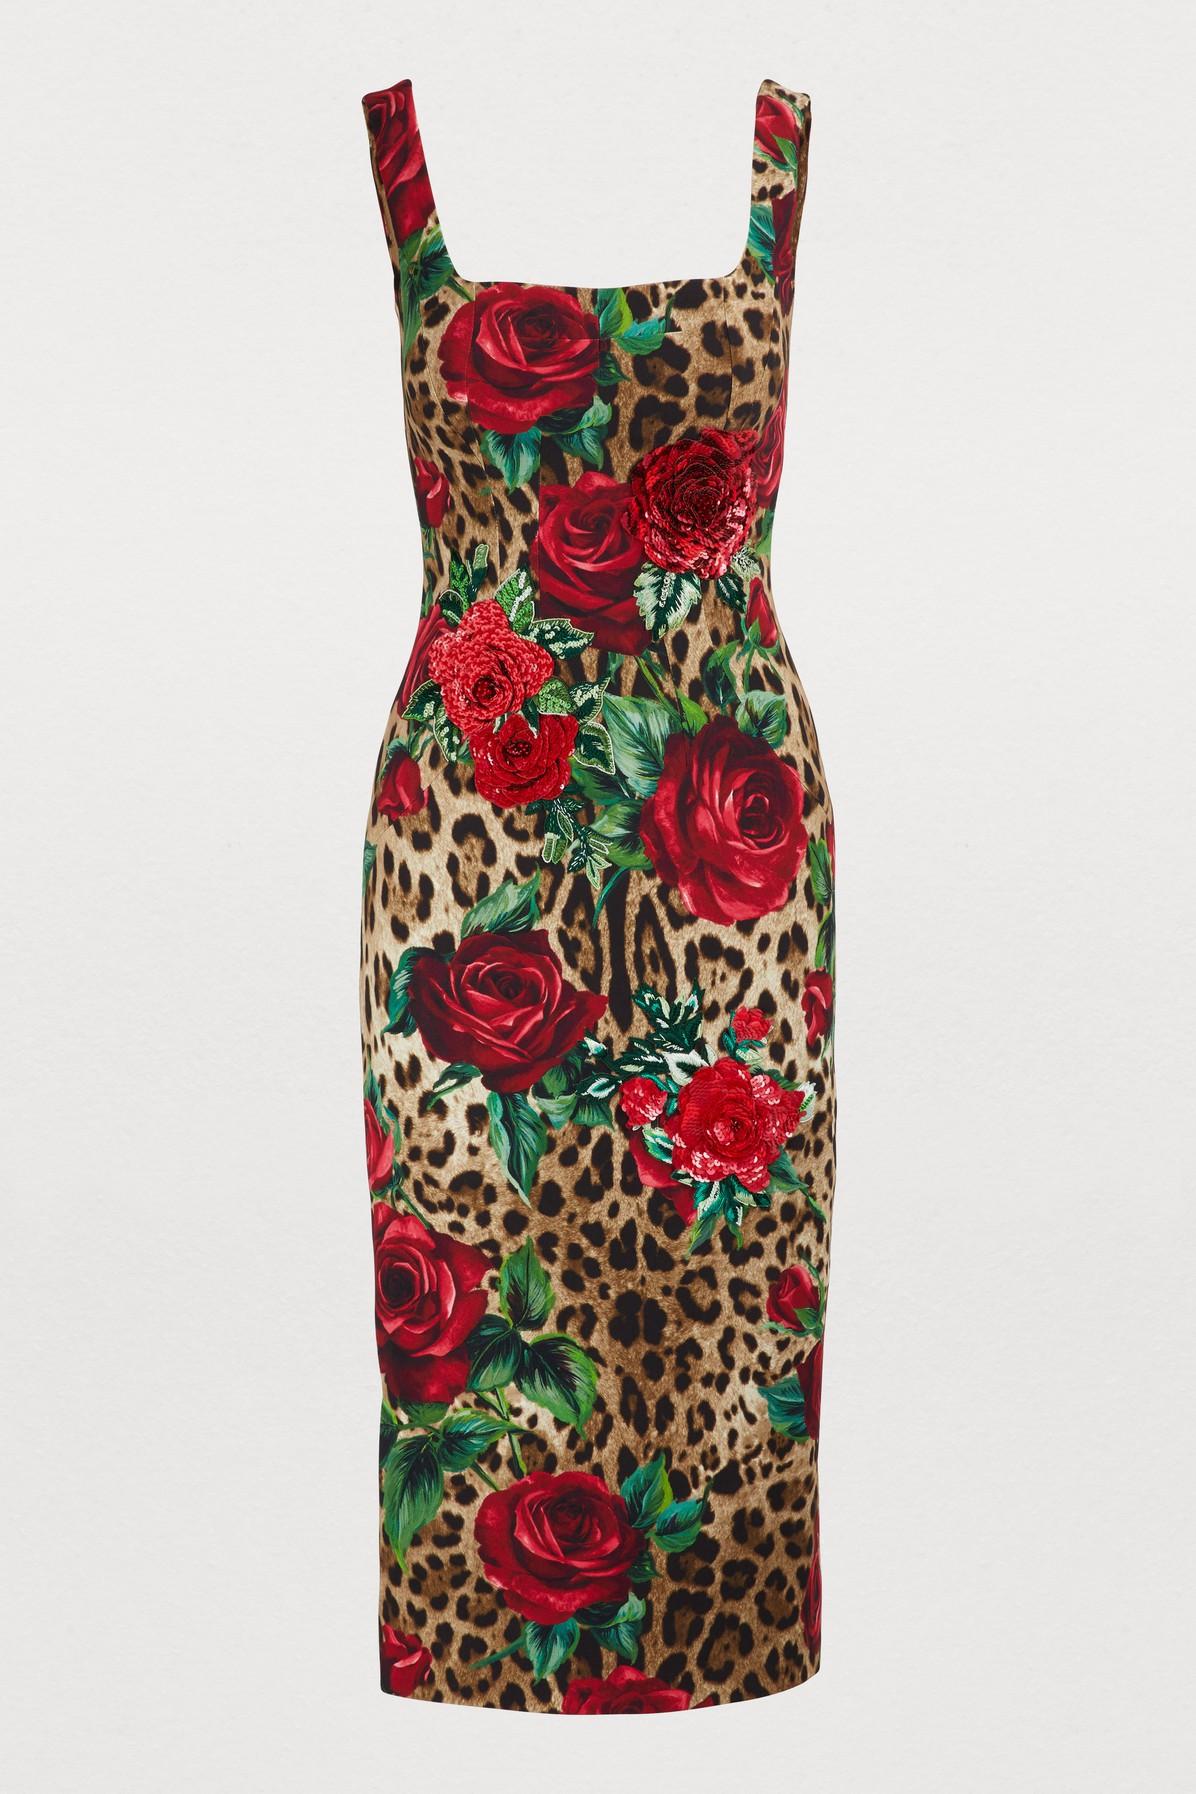 Dolce ☀ Gabbana Leopard And Rose Print ...